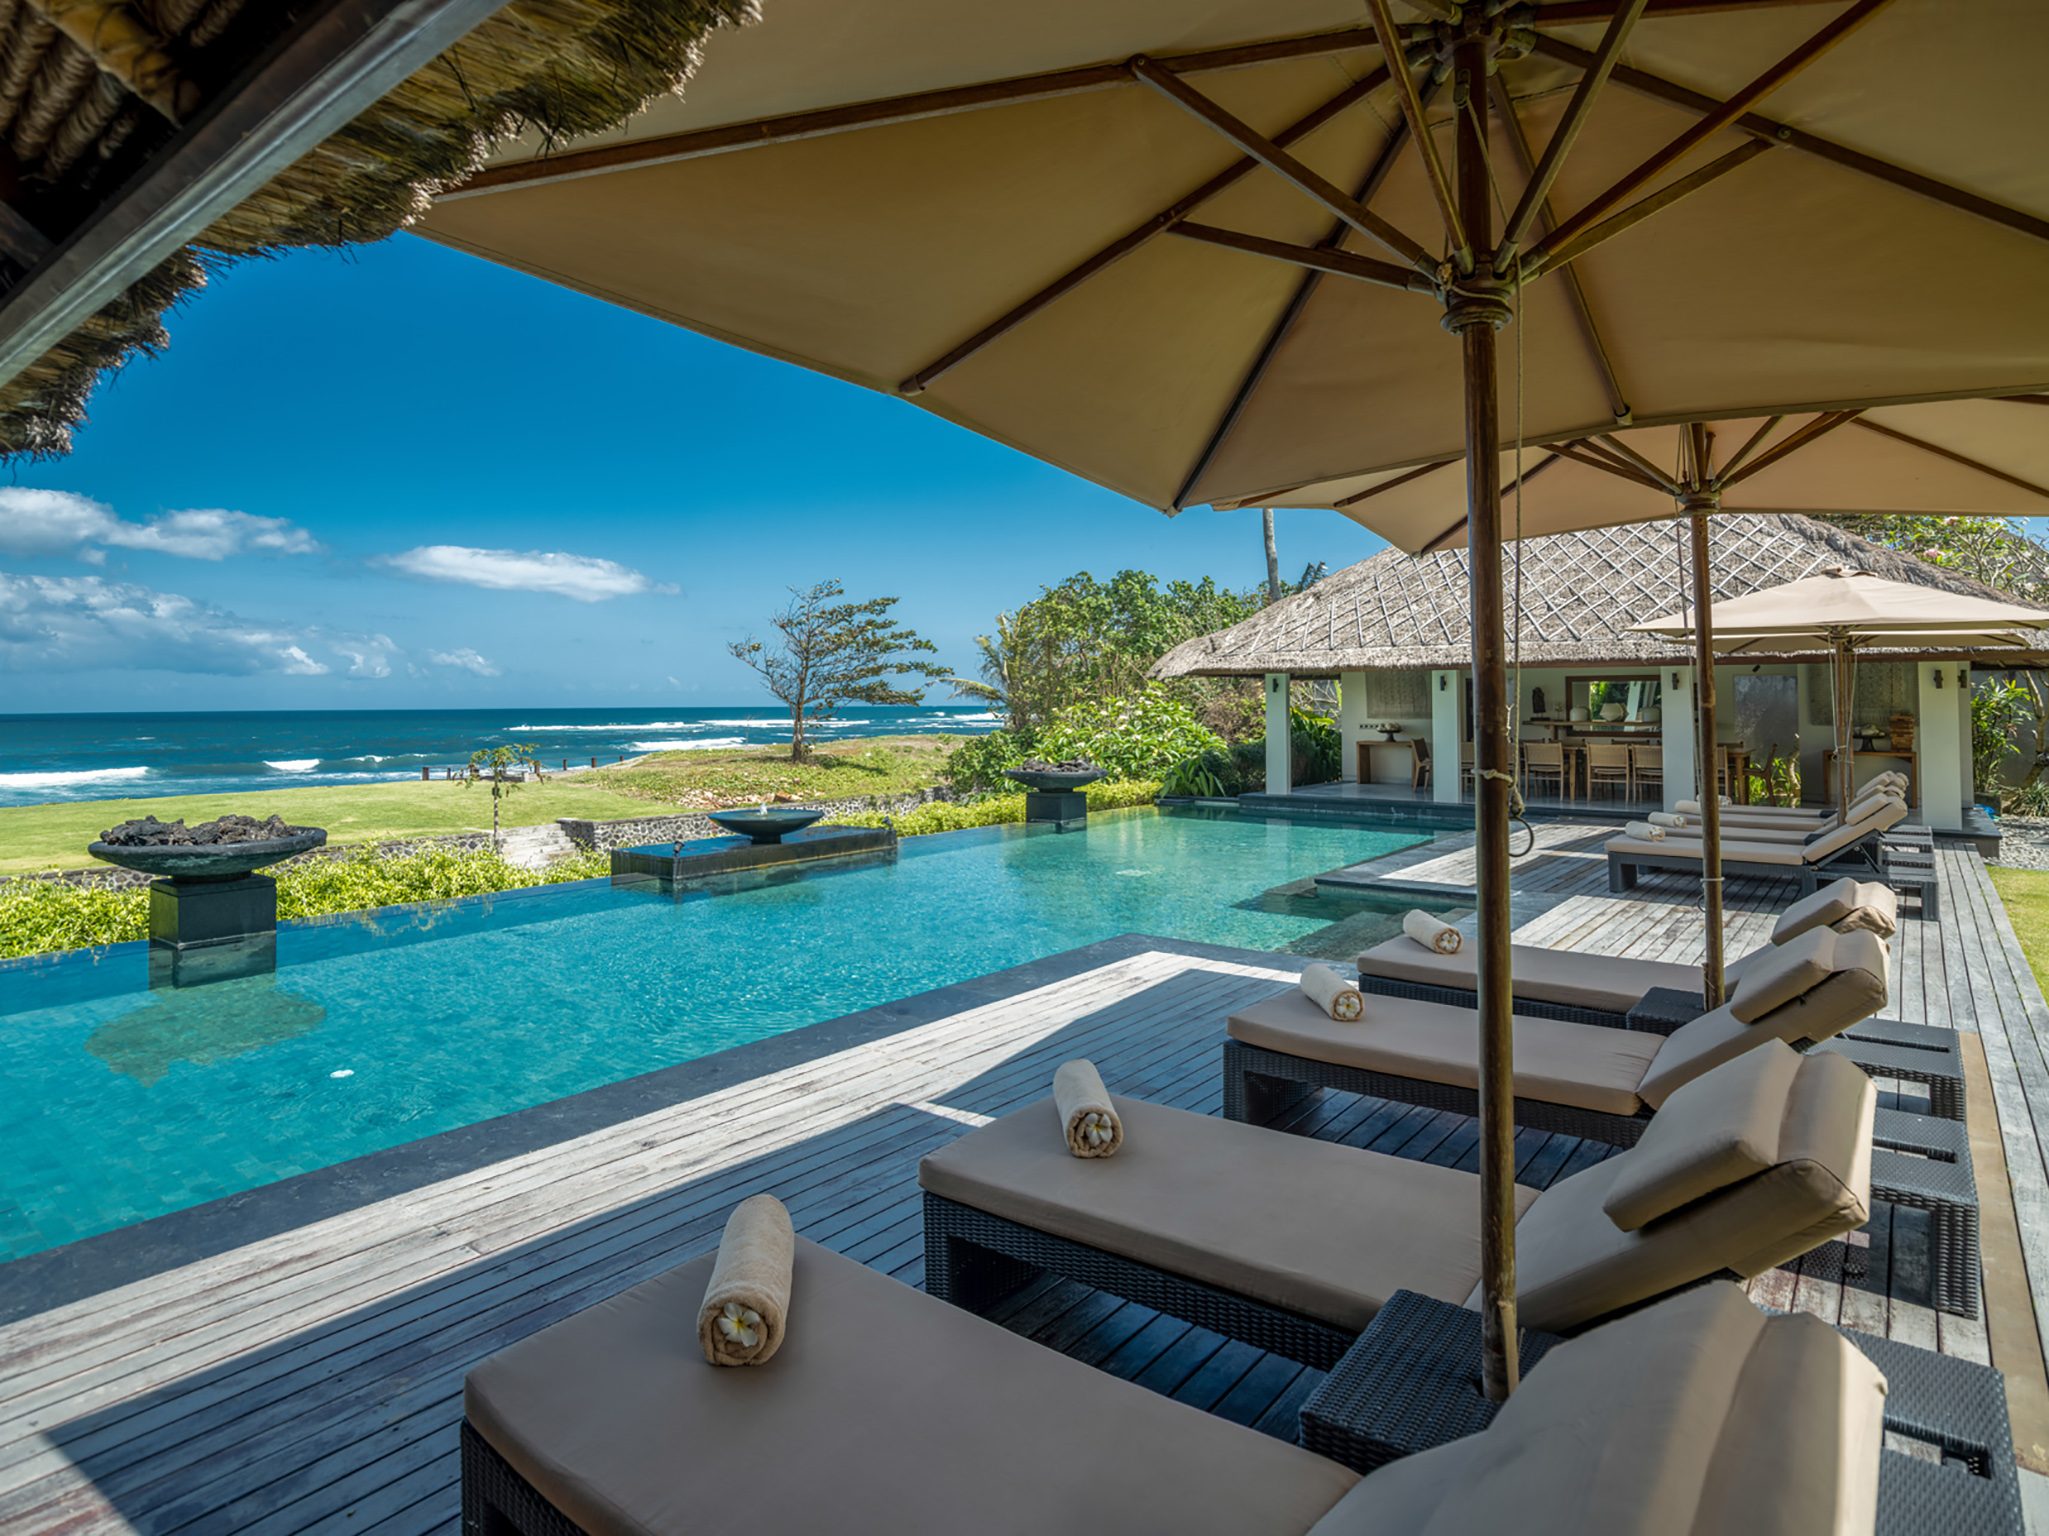 Seseh Beach Villa I - View from pool deck - Seseh Beach Villa I, Seseh-Tanah Lot, Bali